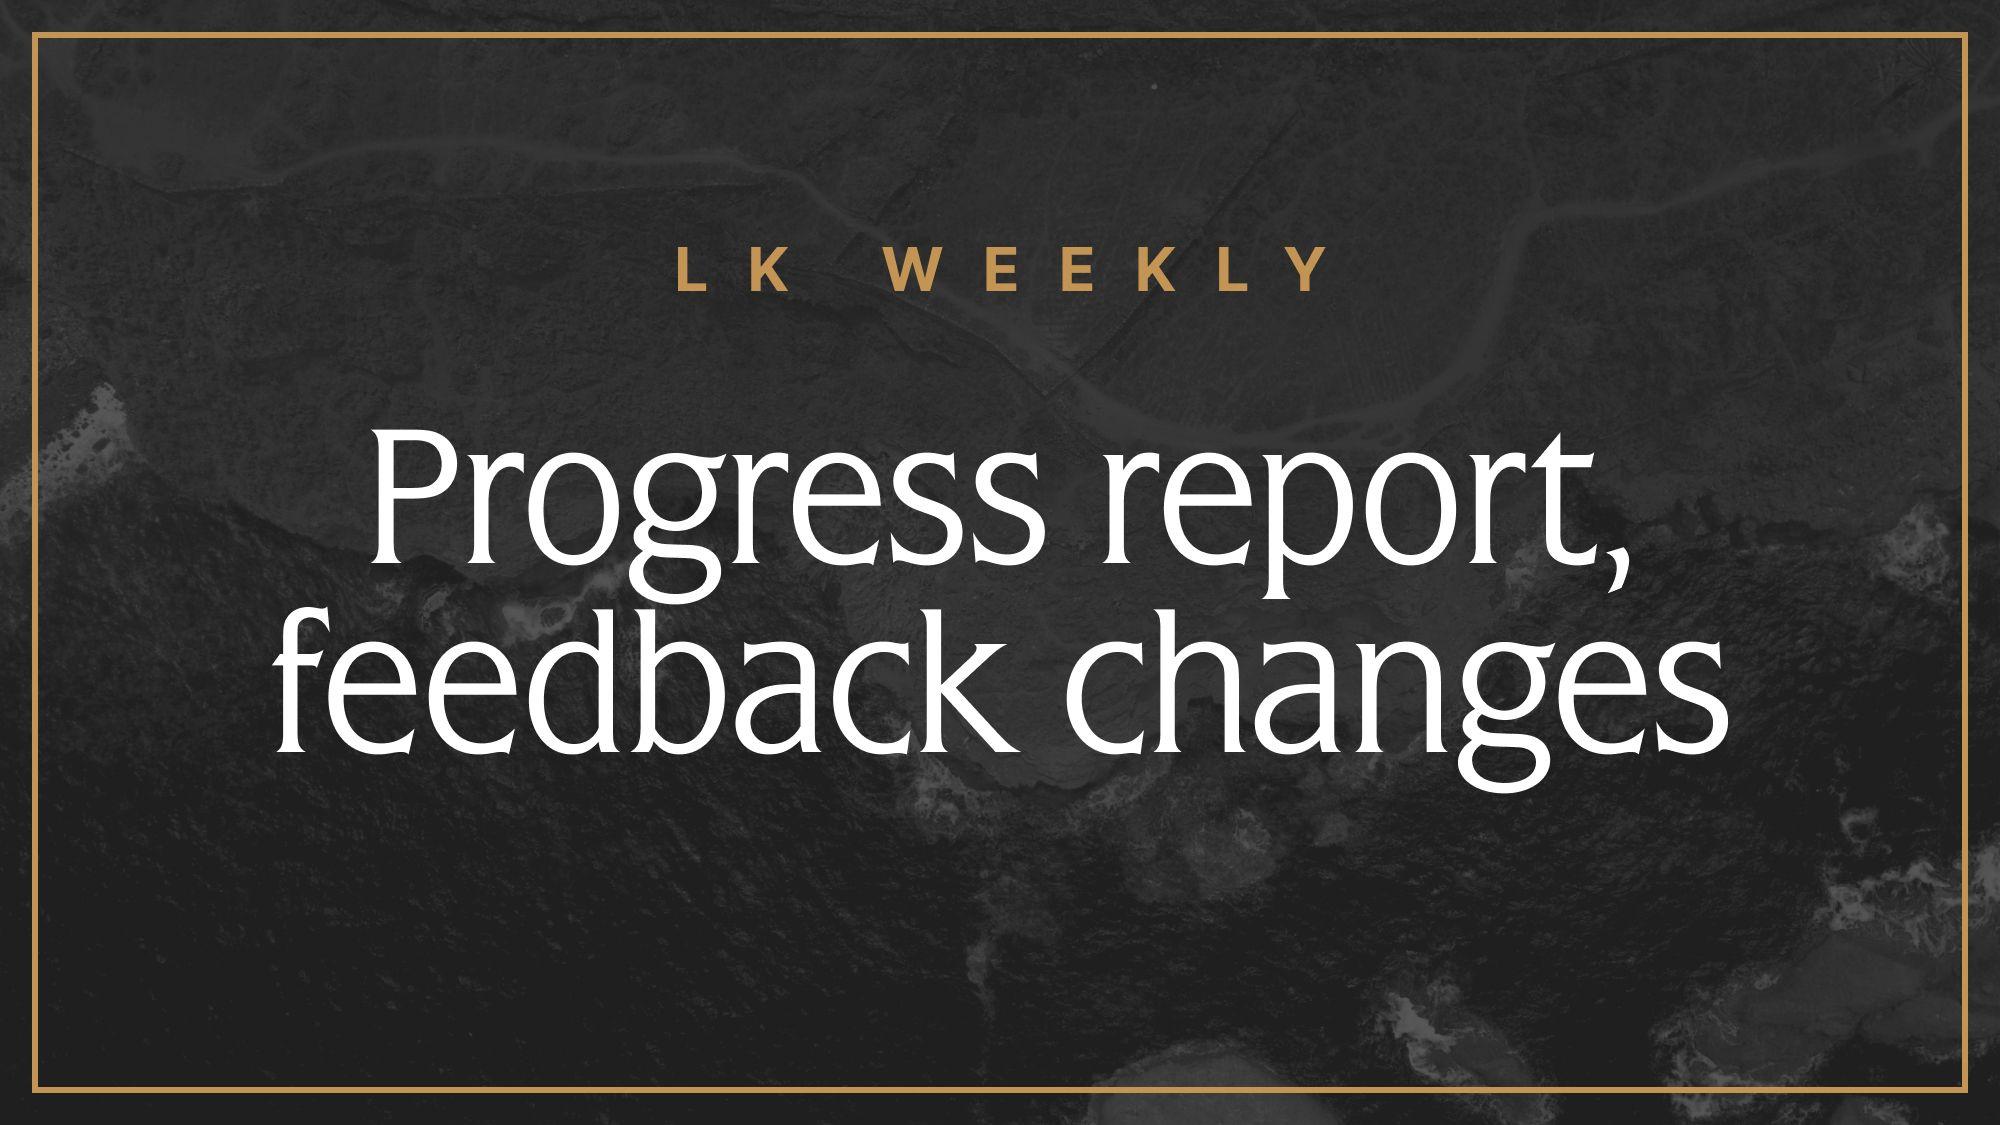 Progress report, feedback changes